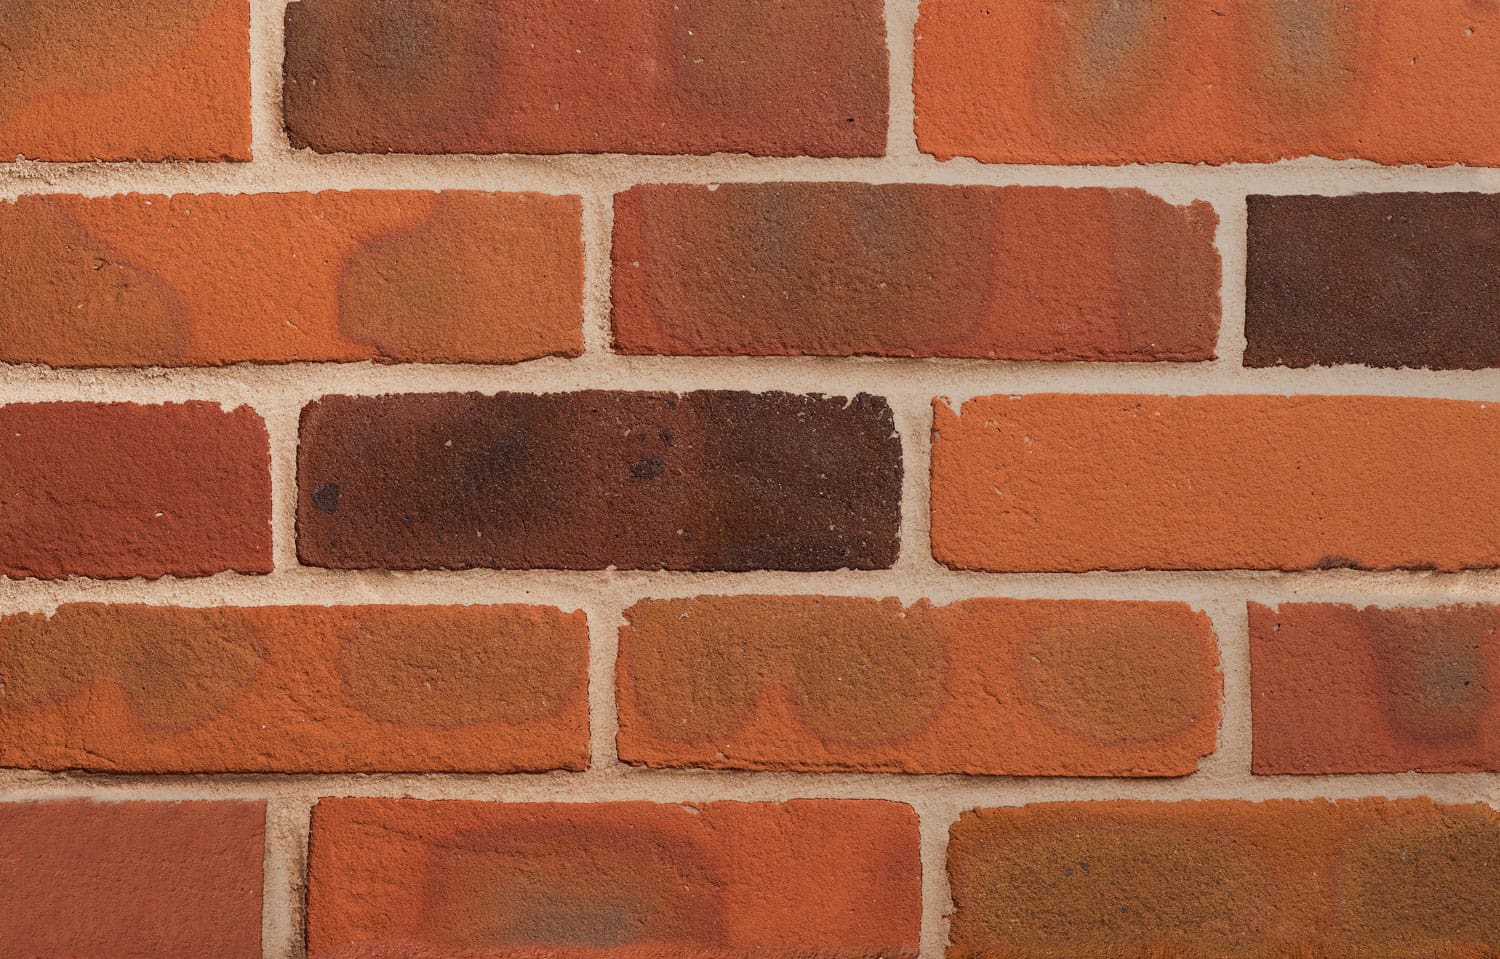 Stock Cobham Blend Bricks From MBH PLC